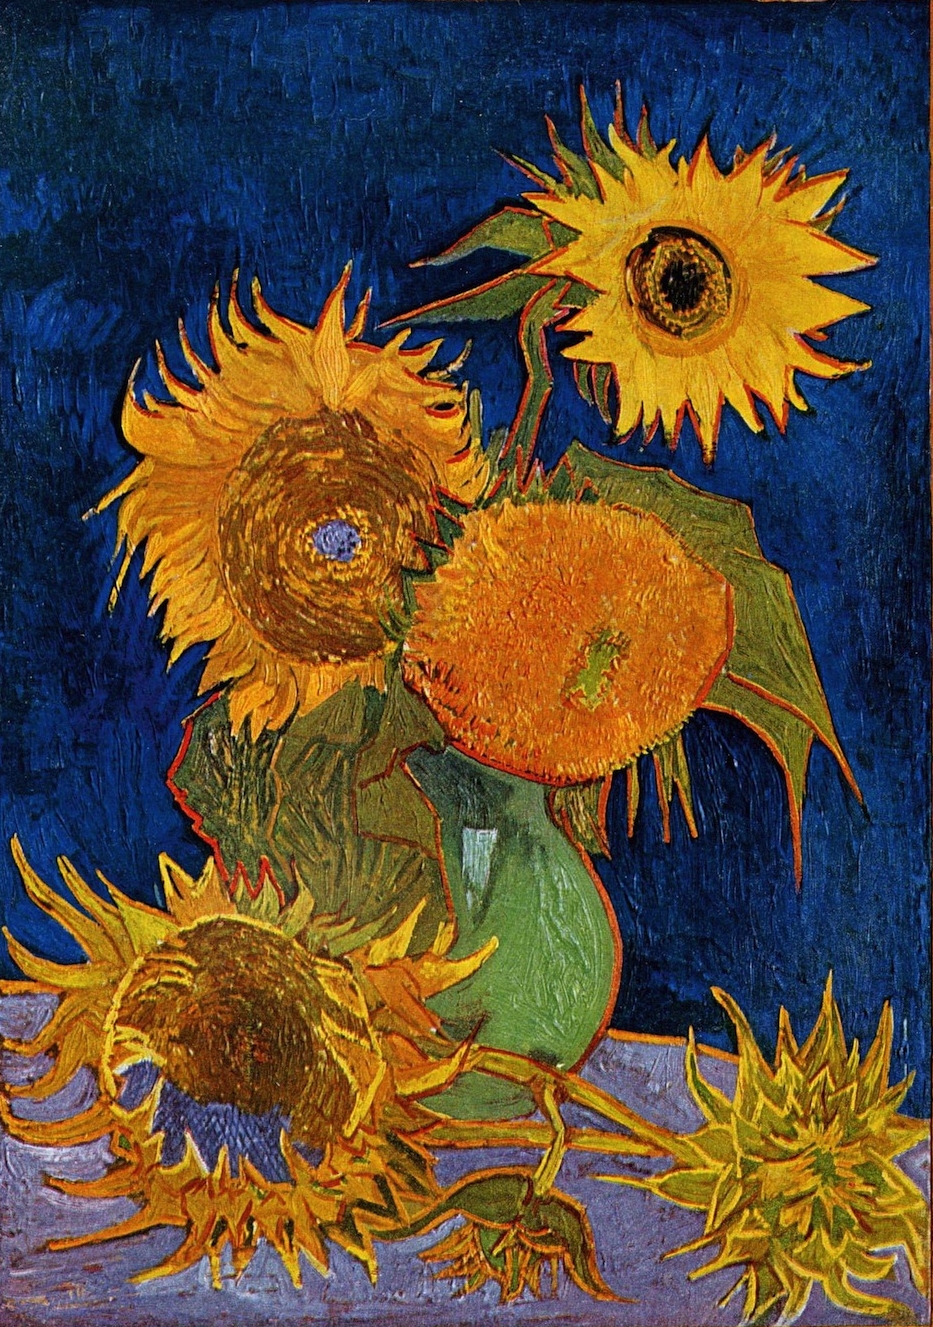 Vincent+Van+Gogh-1853-1890 (459).jpg